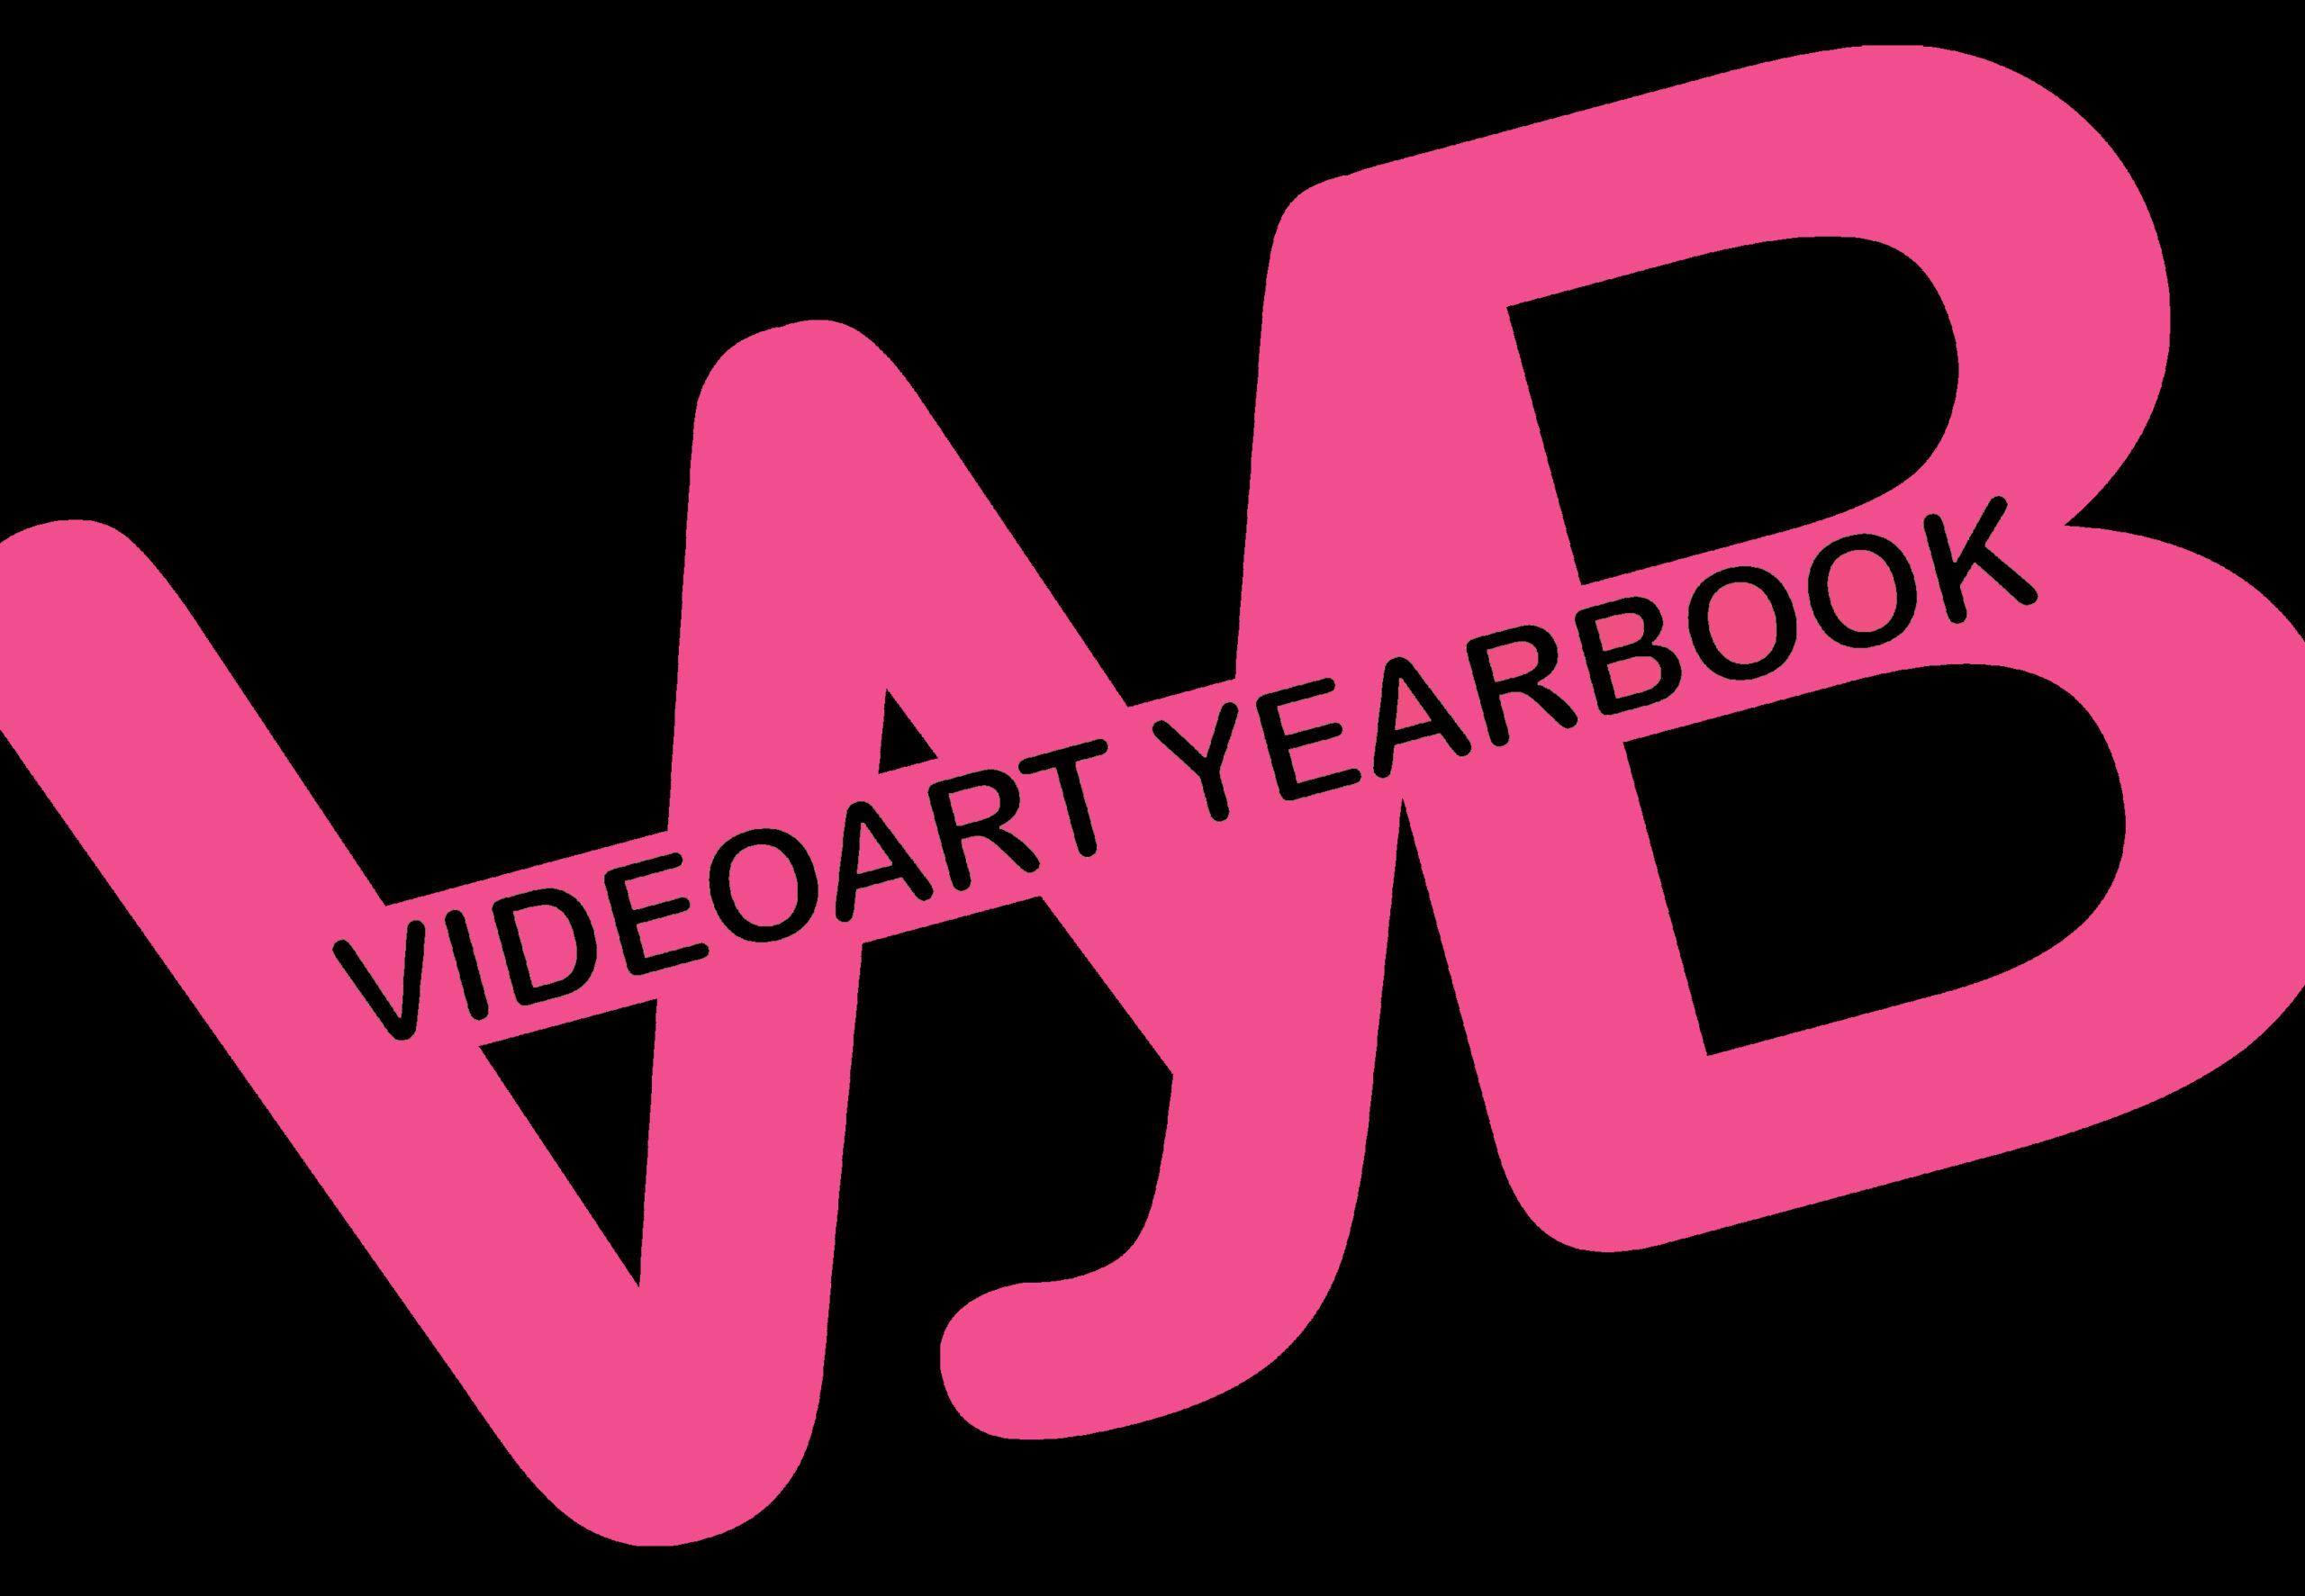 Videoart Yearbook XV edizione